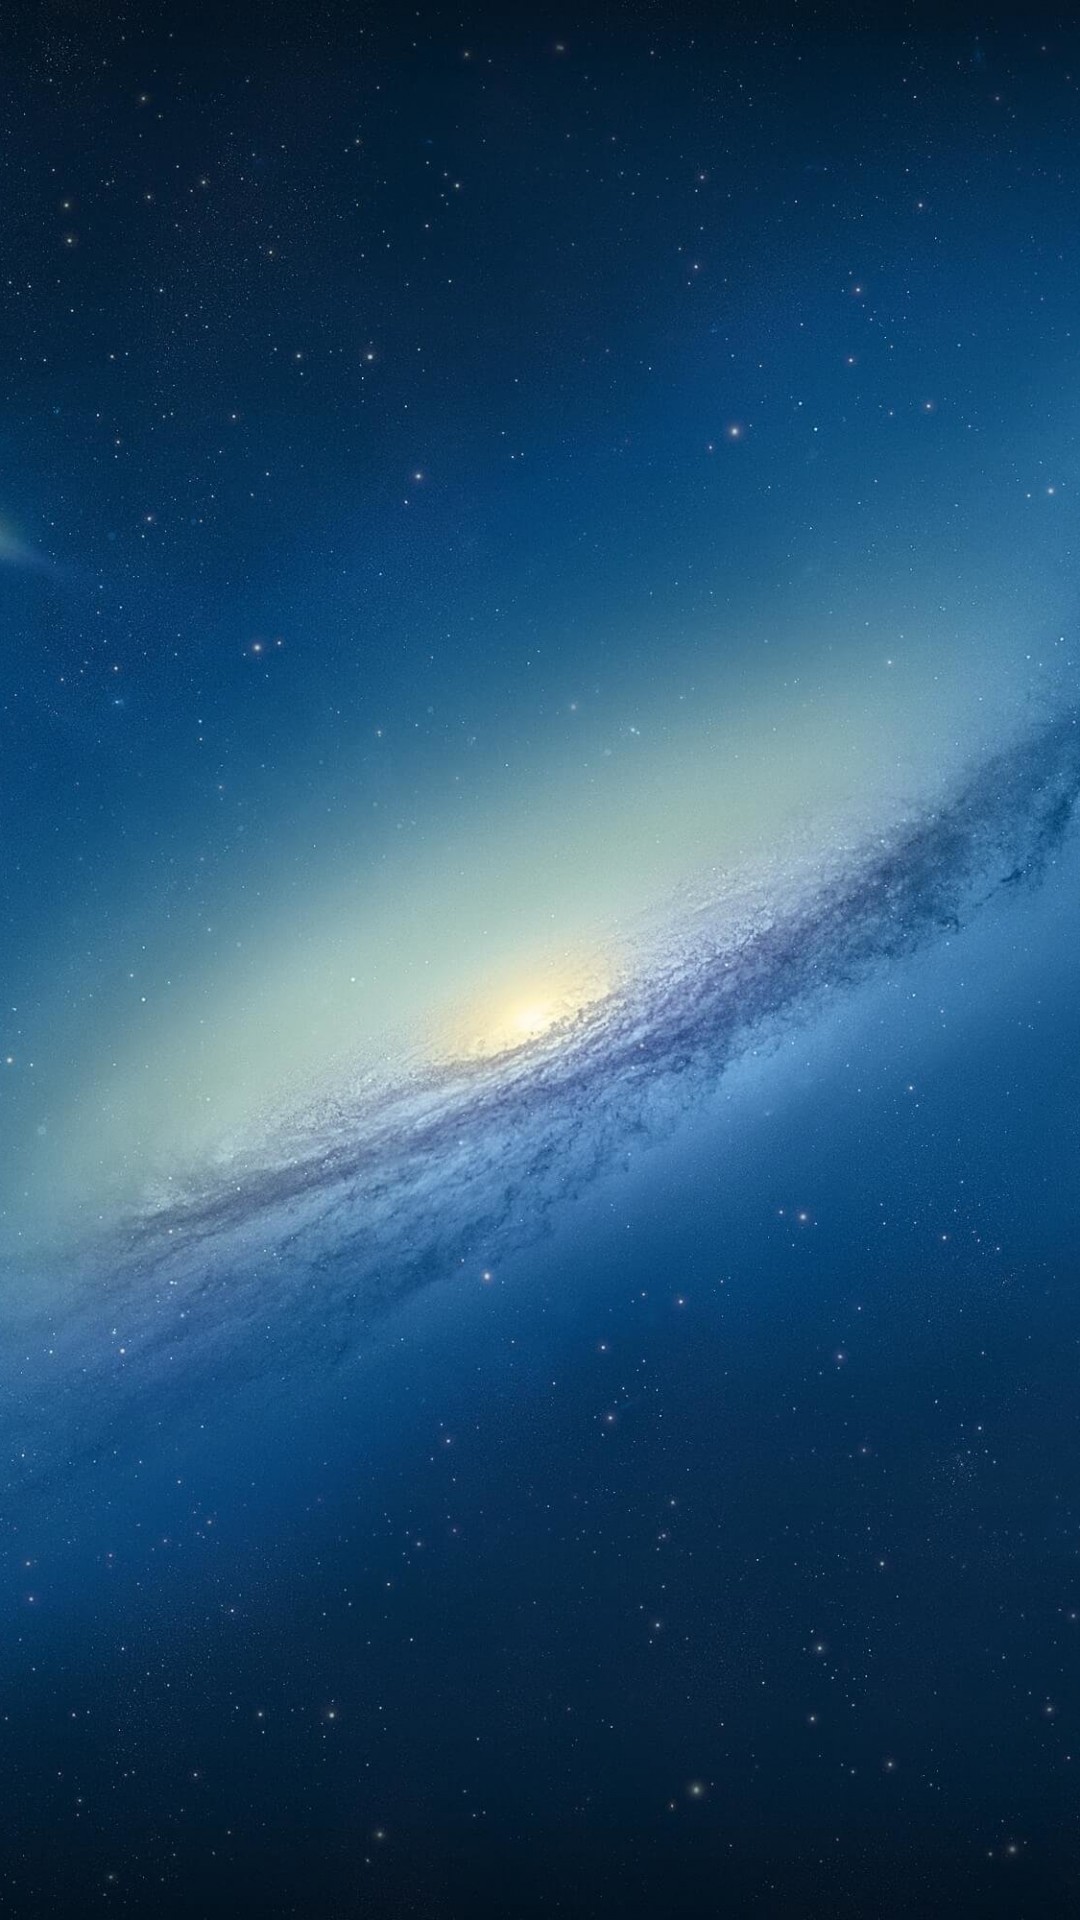 Galaxy NGC 3190 Wallpaper for SAMSUNG Galaxy S4